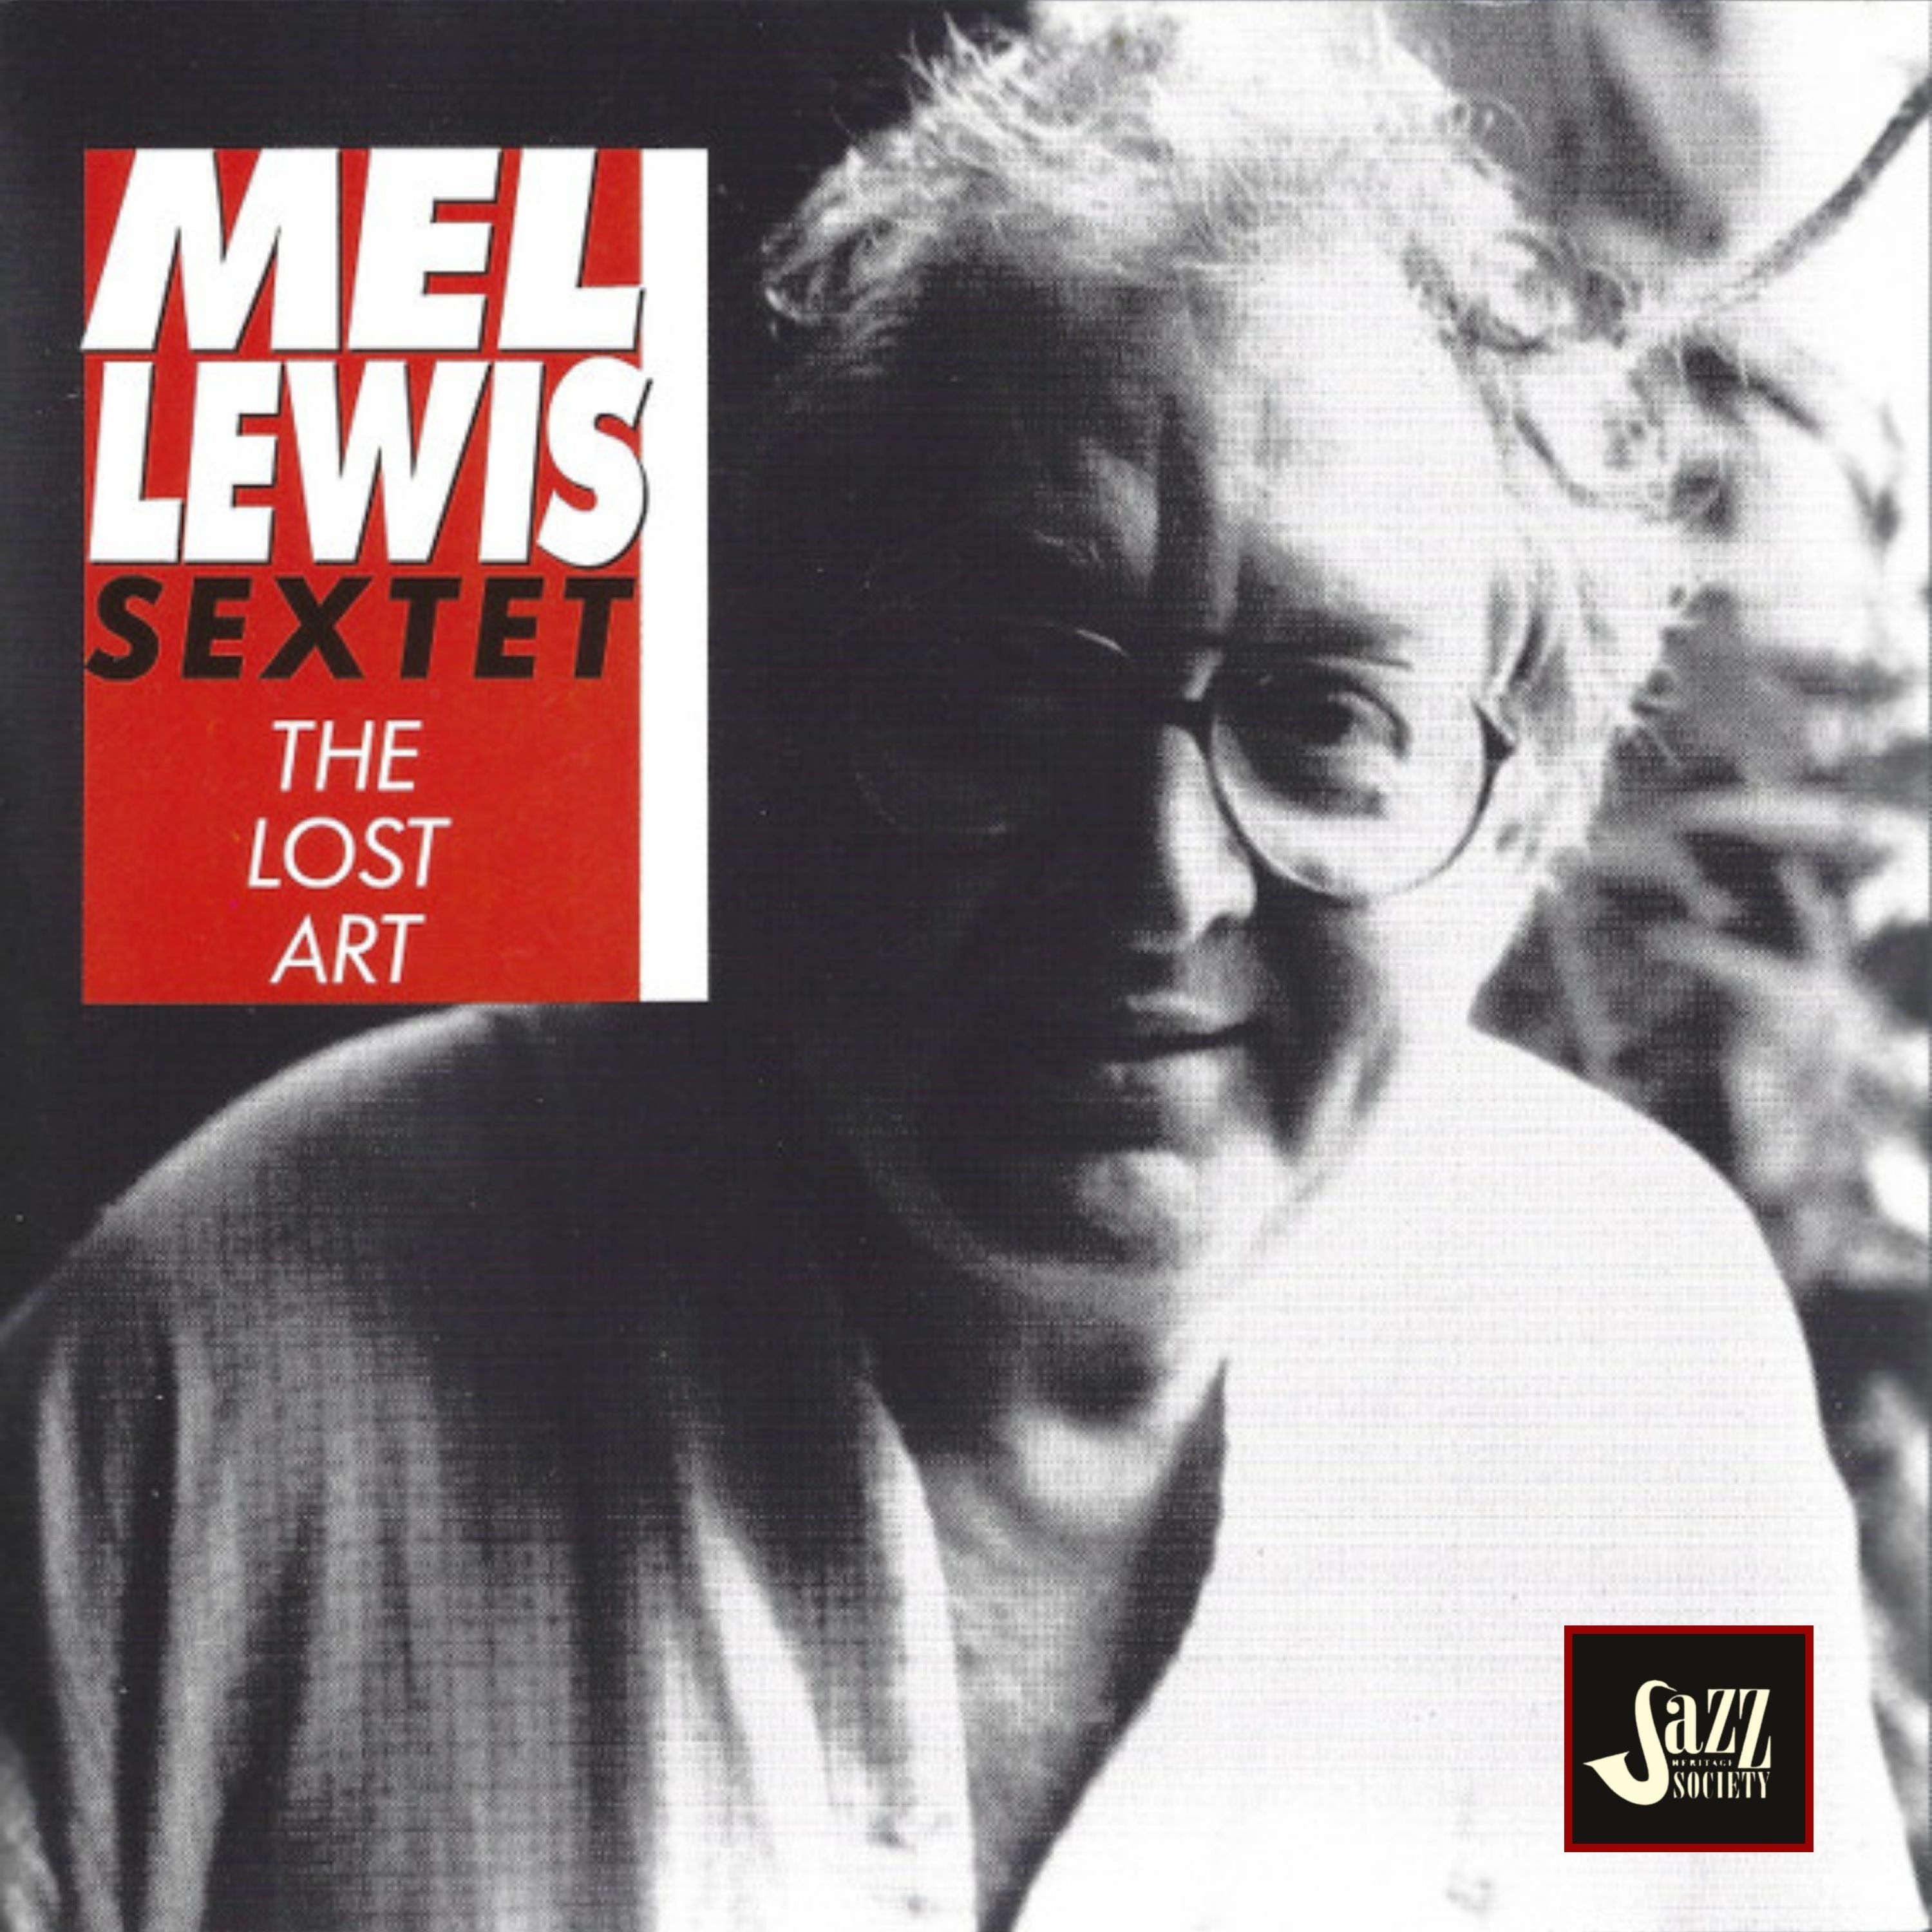 MEL LEWIS SEXTET: The Lost Art